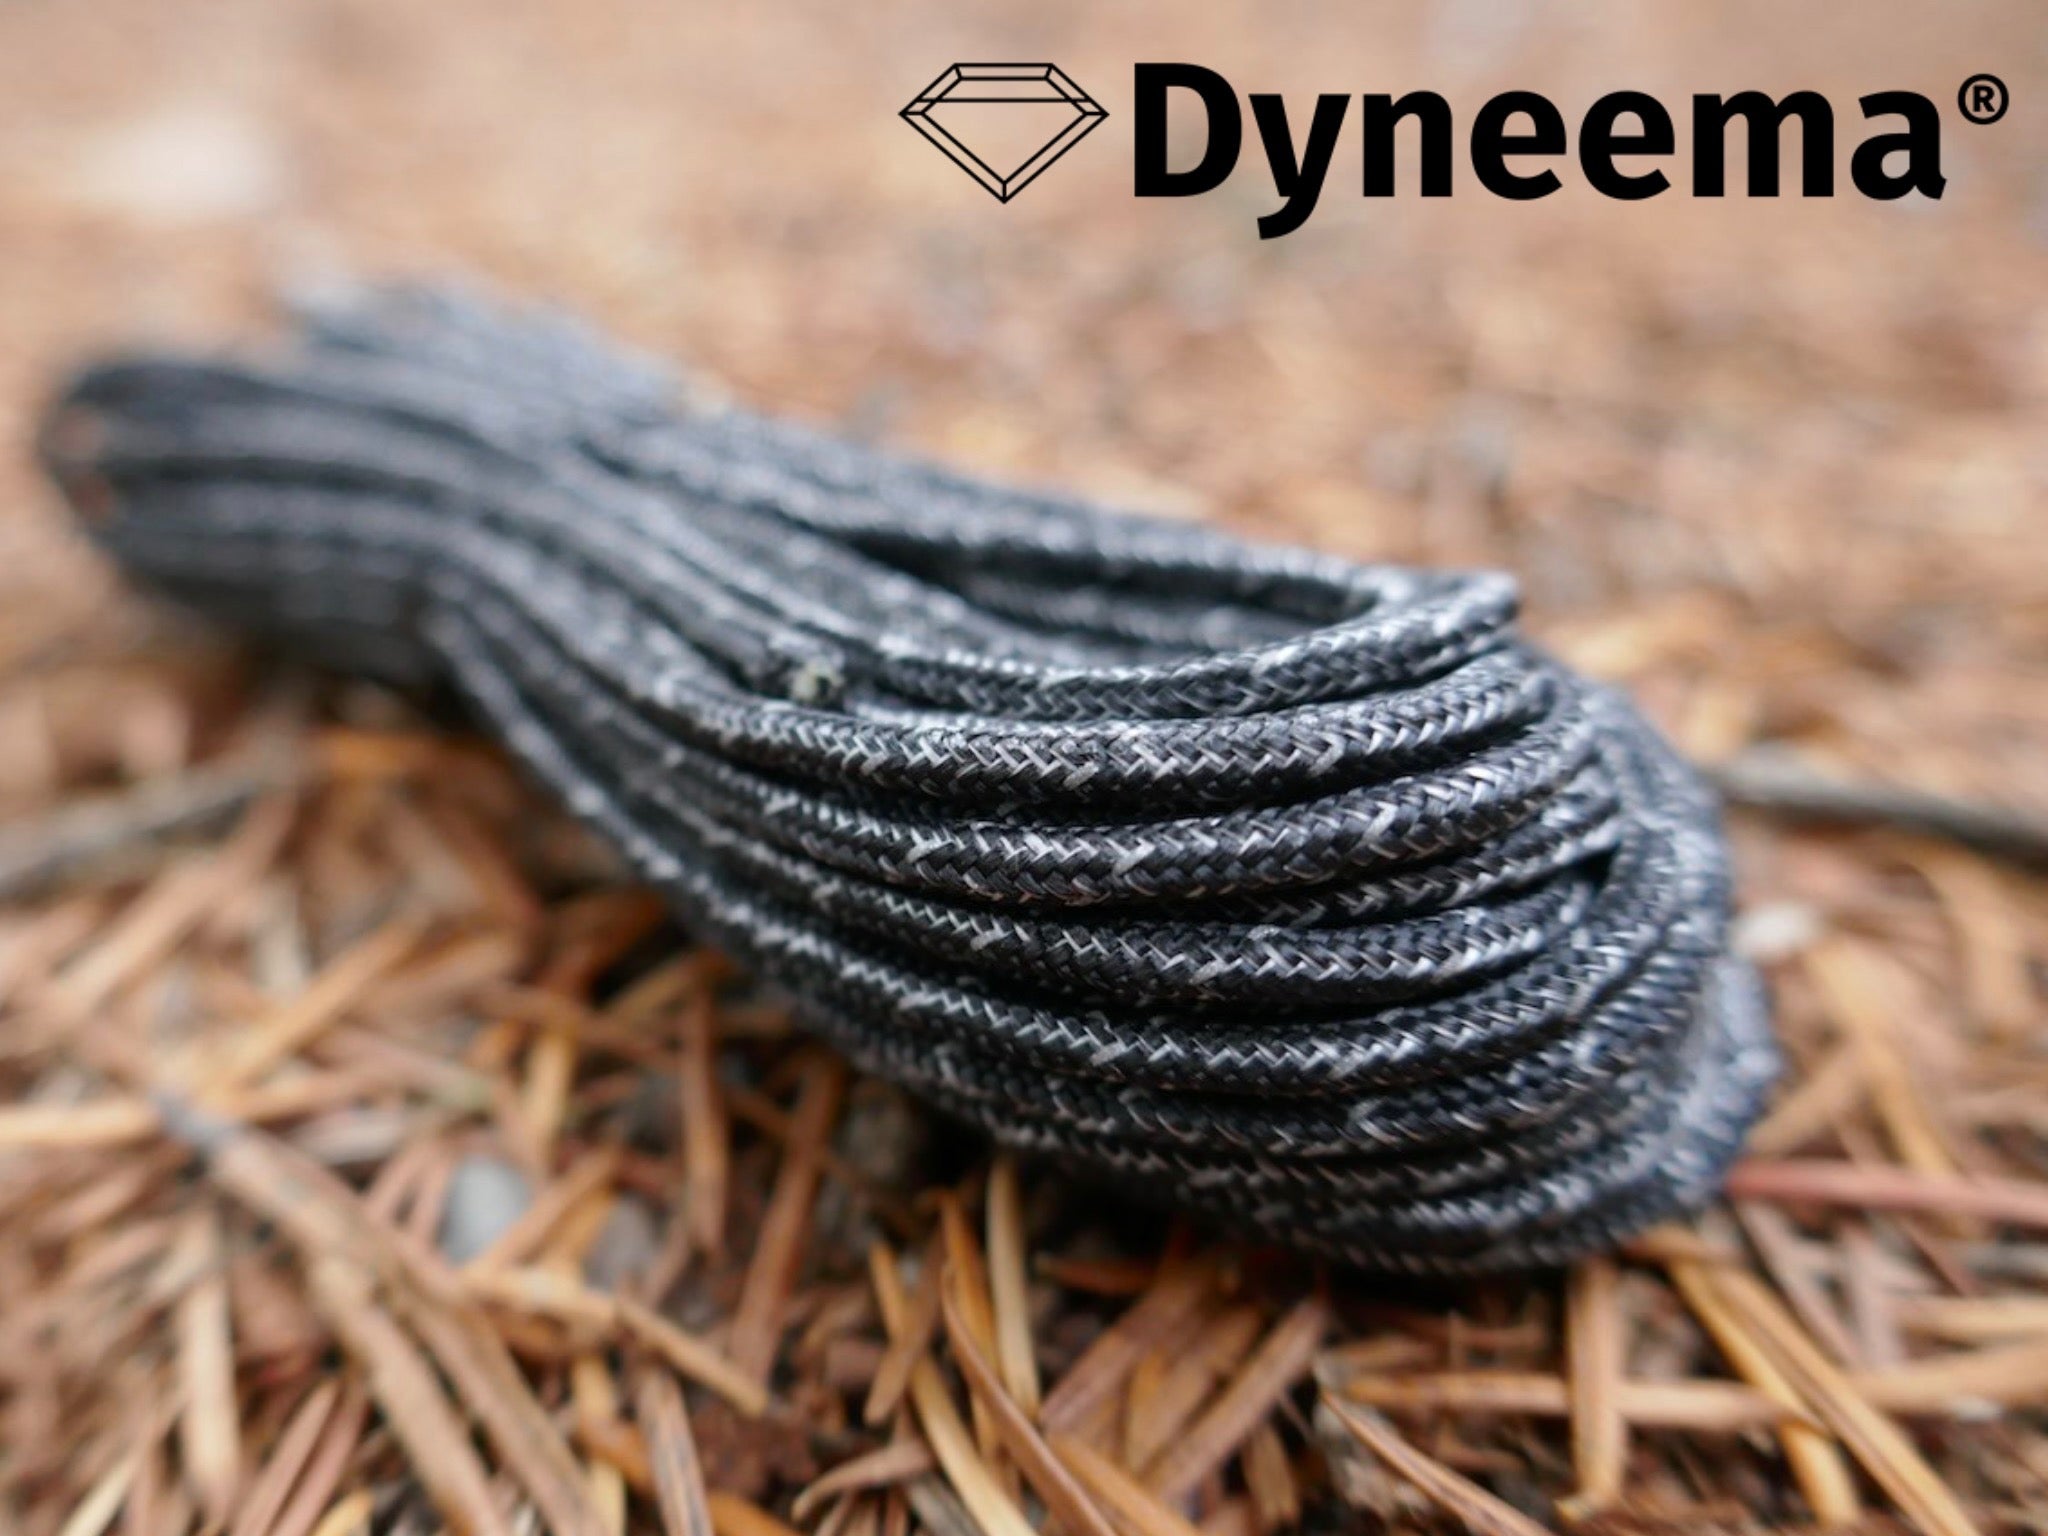 Dyneema 1.7mm/0.06 - Tent Guy Line, Nordic Wildwood